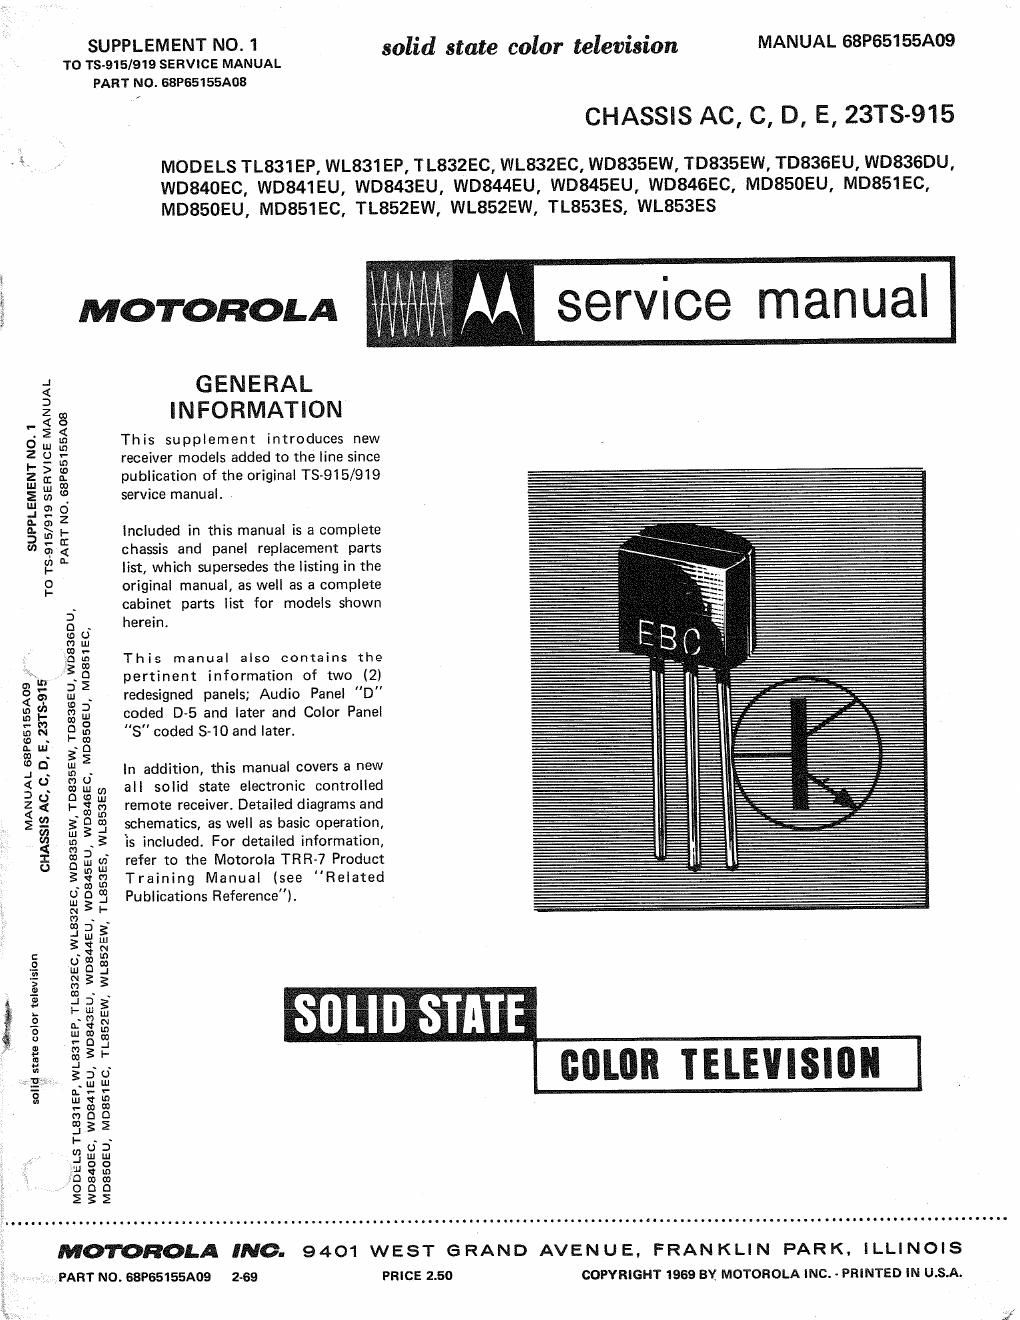 motorola wd 835 ew service manual